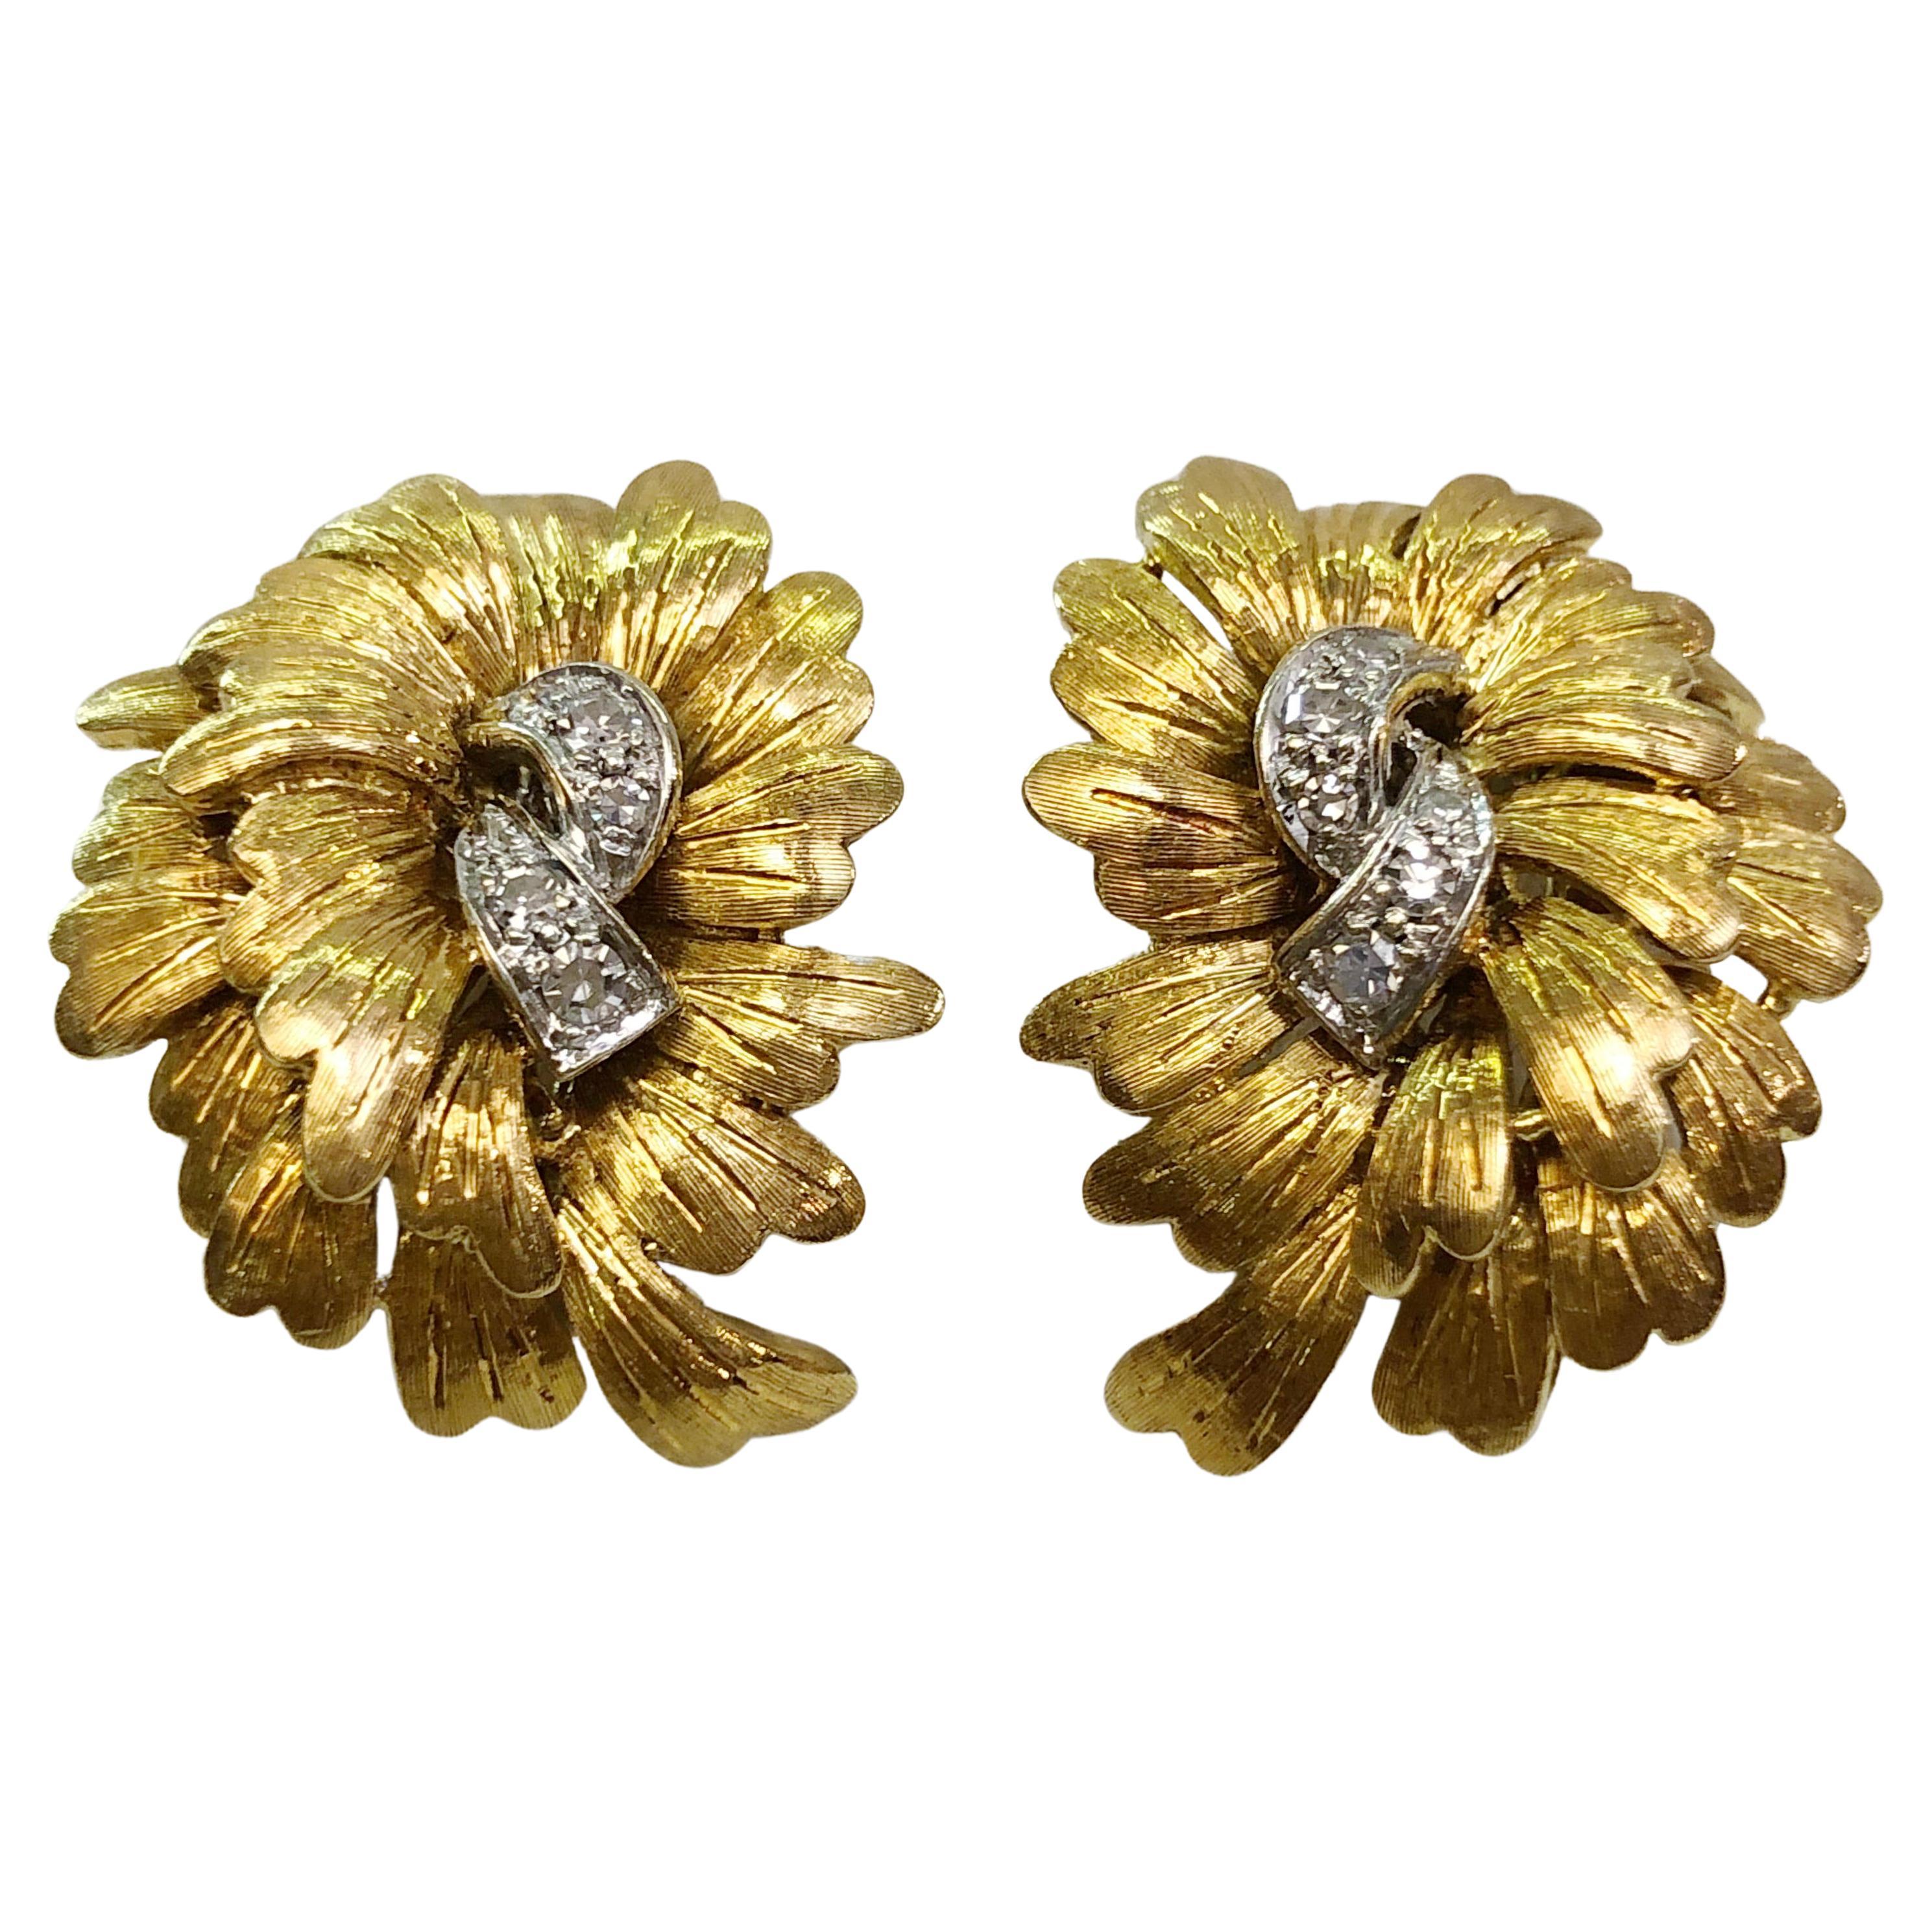 Pair of 18 Karat Yellow and White Gold Diamond Earrings